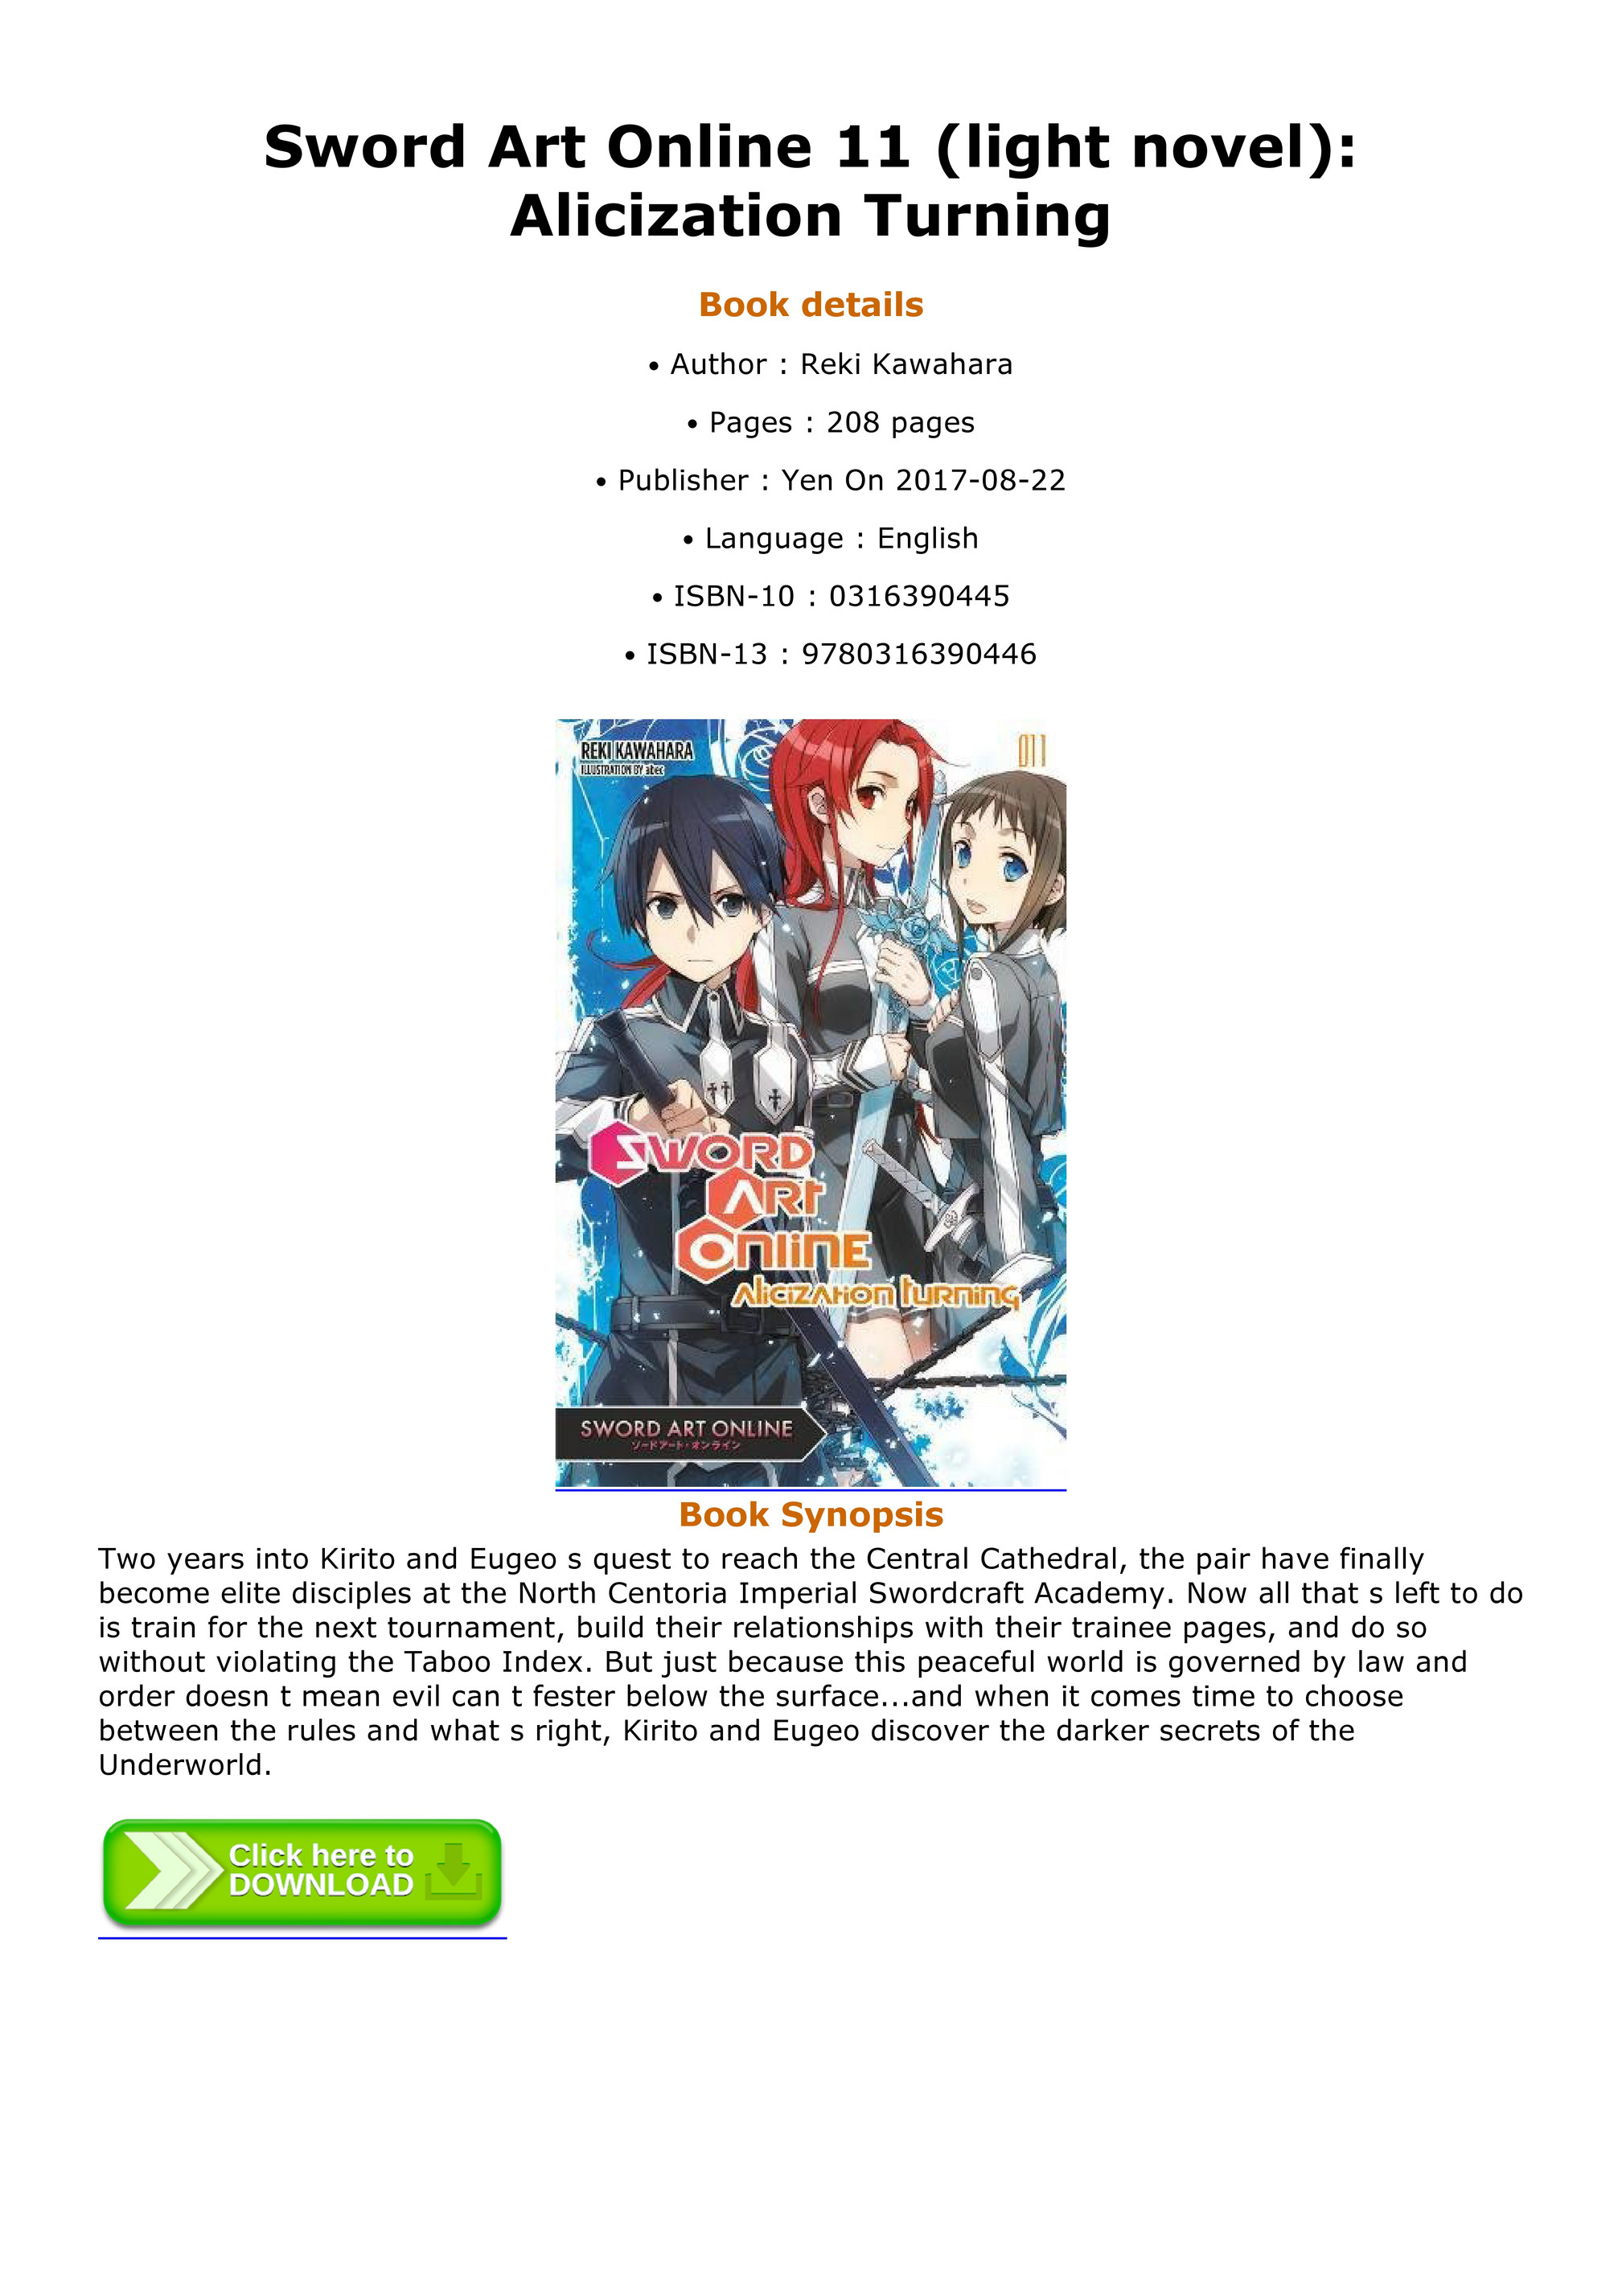 Top - Sword Art Online 11 Light Novel Alicization Turning - Page 1.